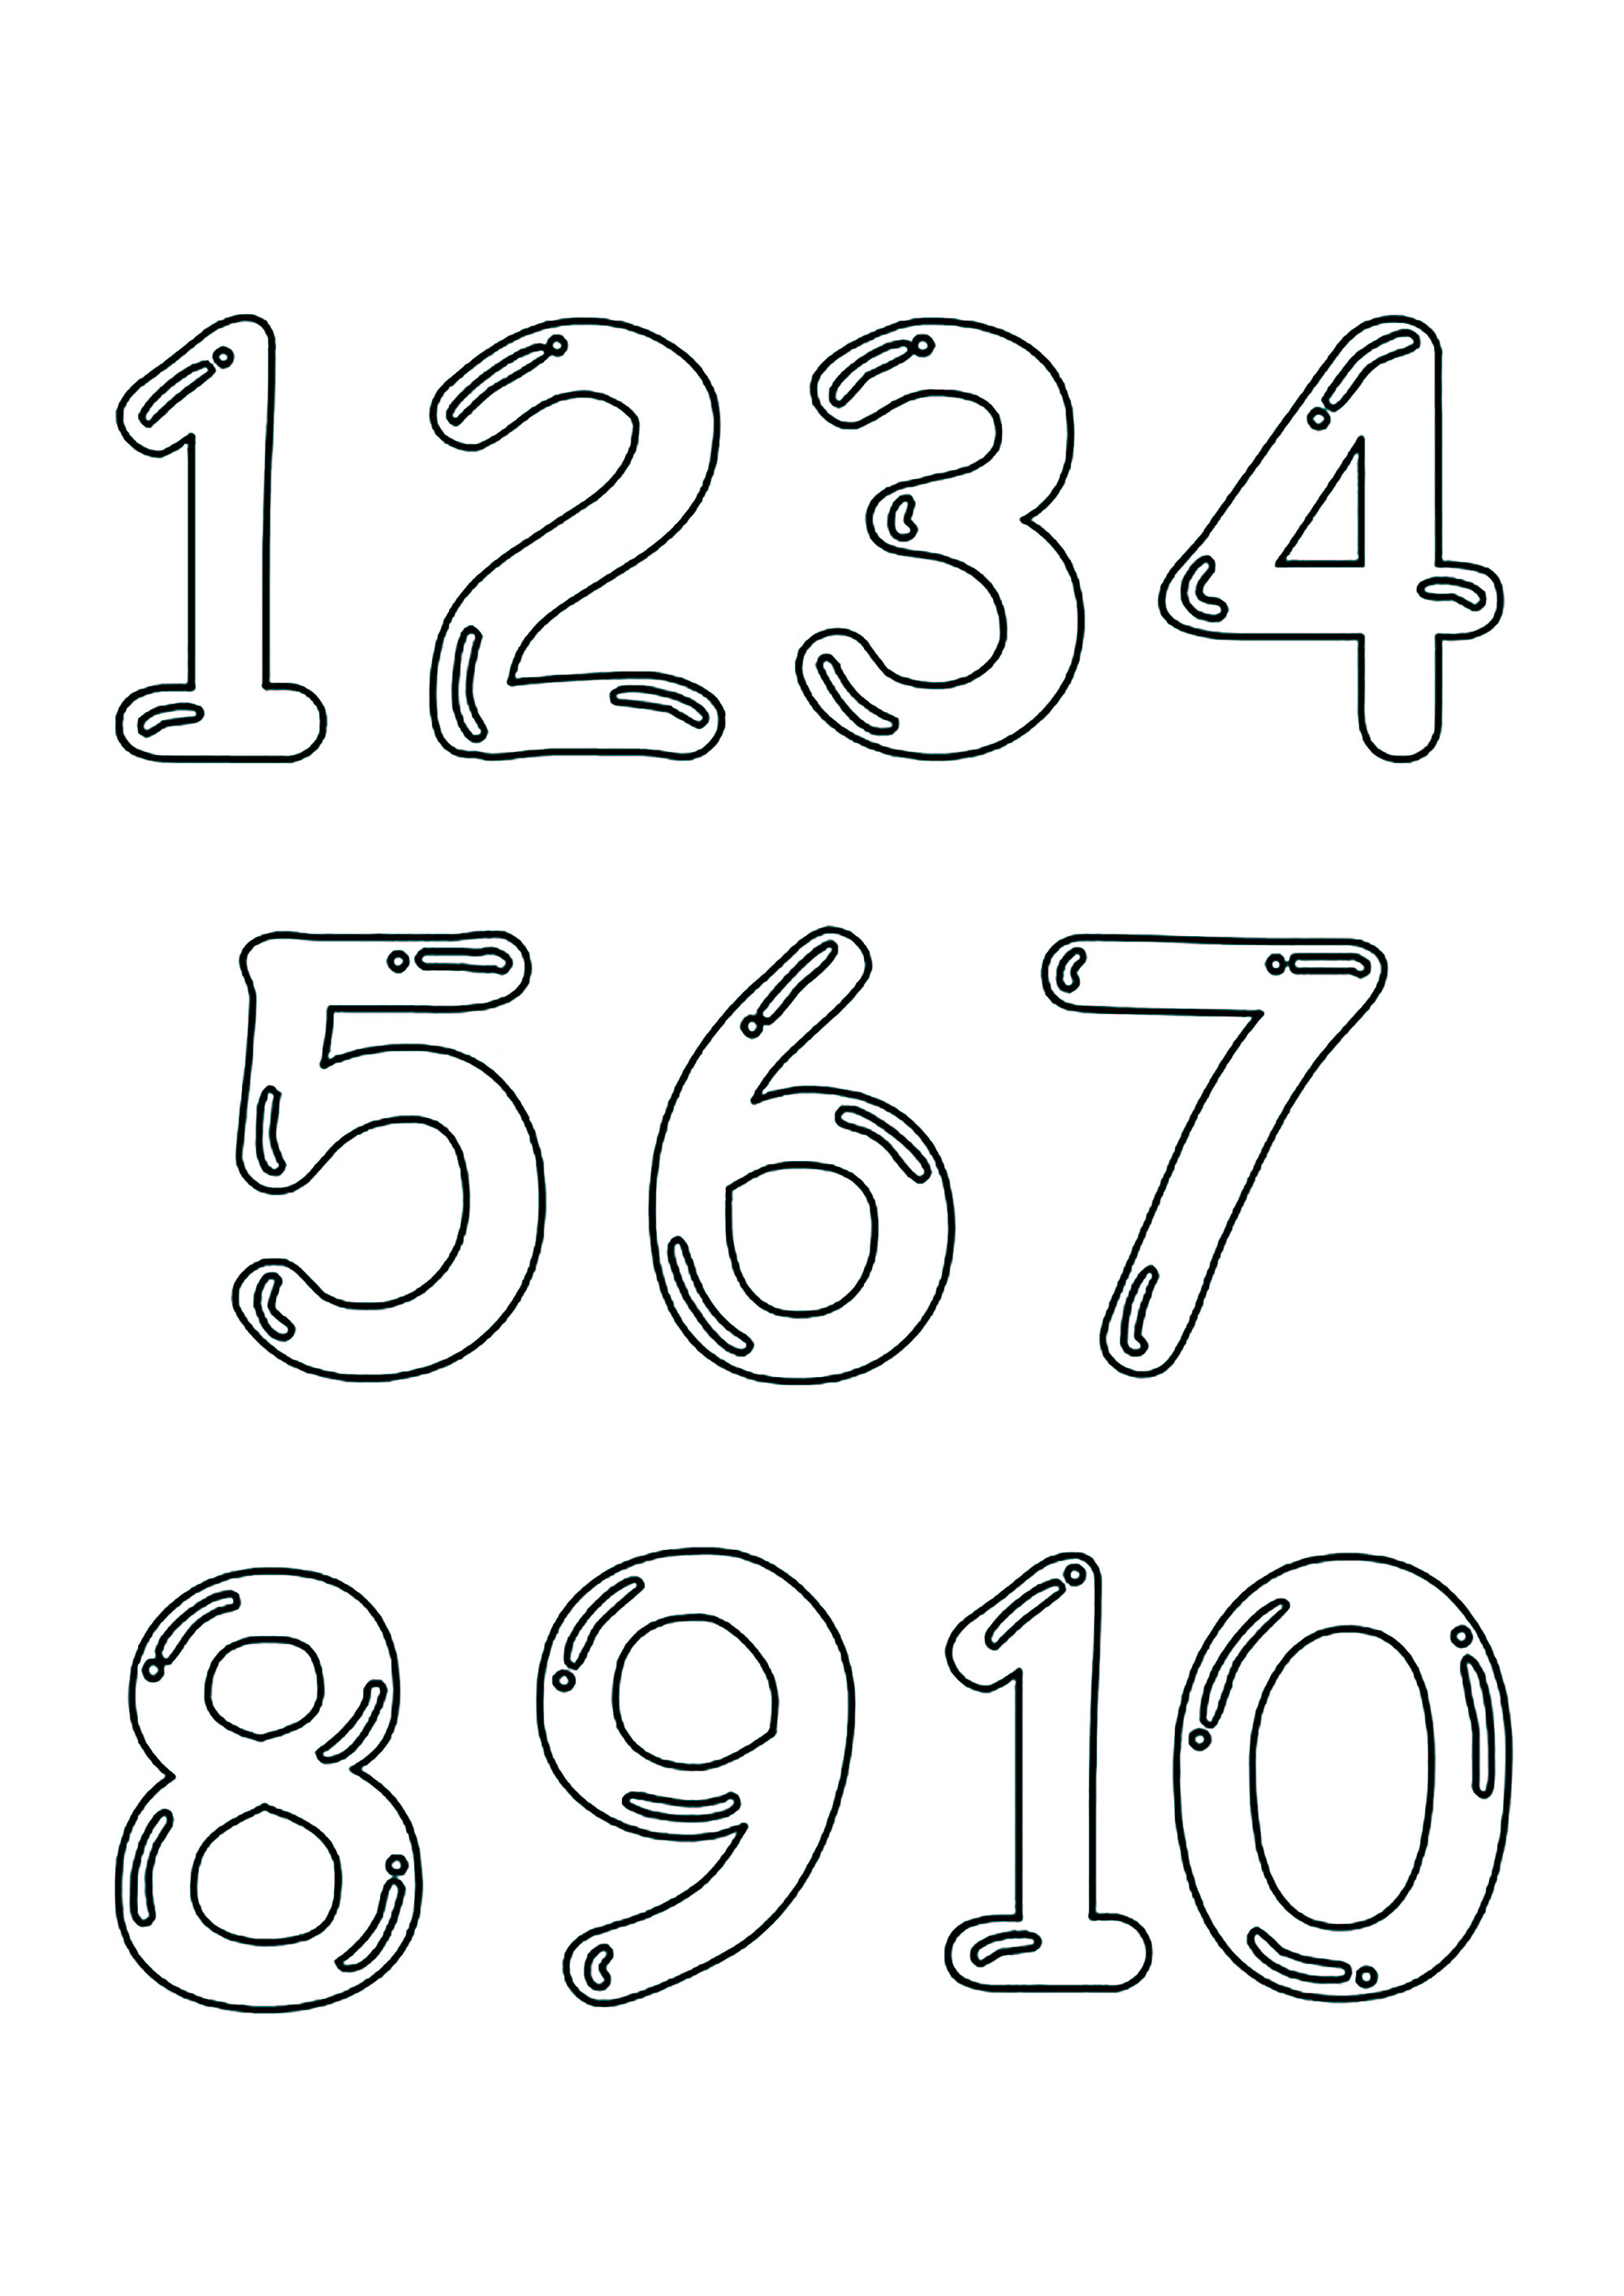 Desenho simples de números de 0 a 10. Pintá-los de cores diferentes!